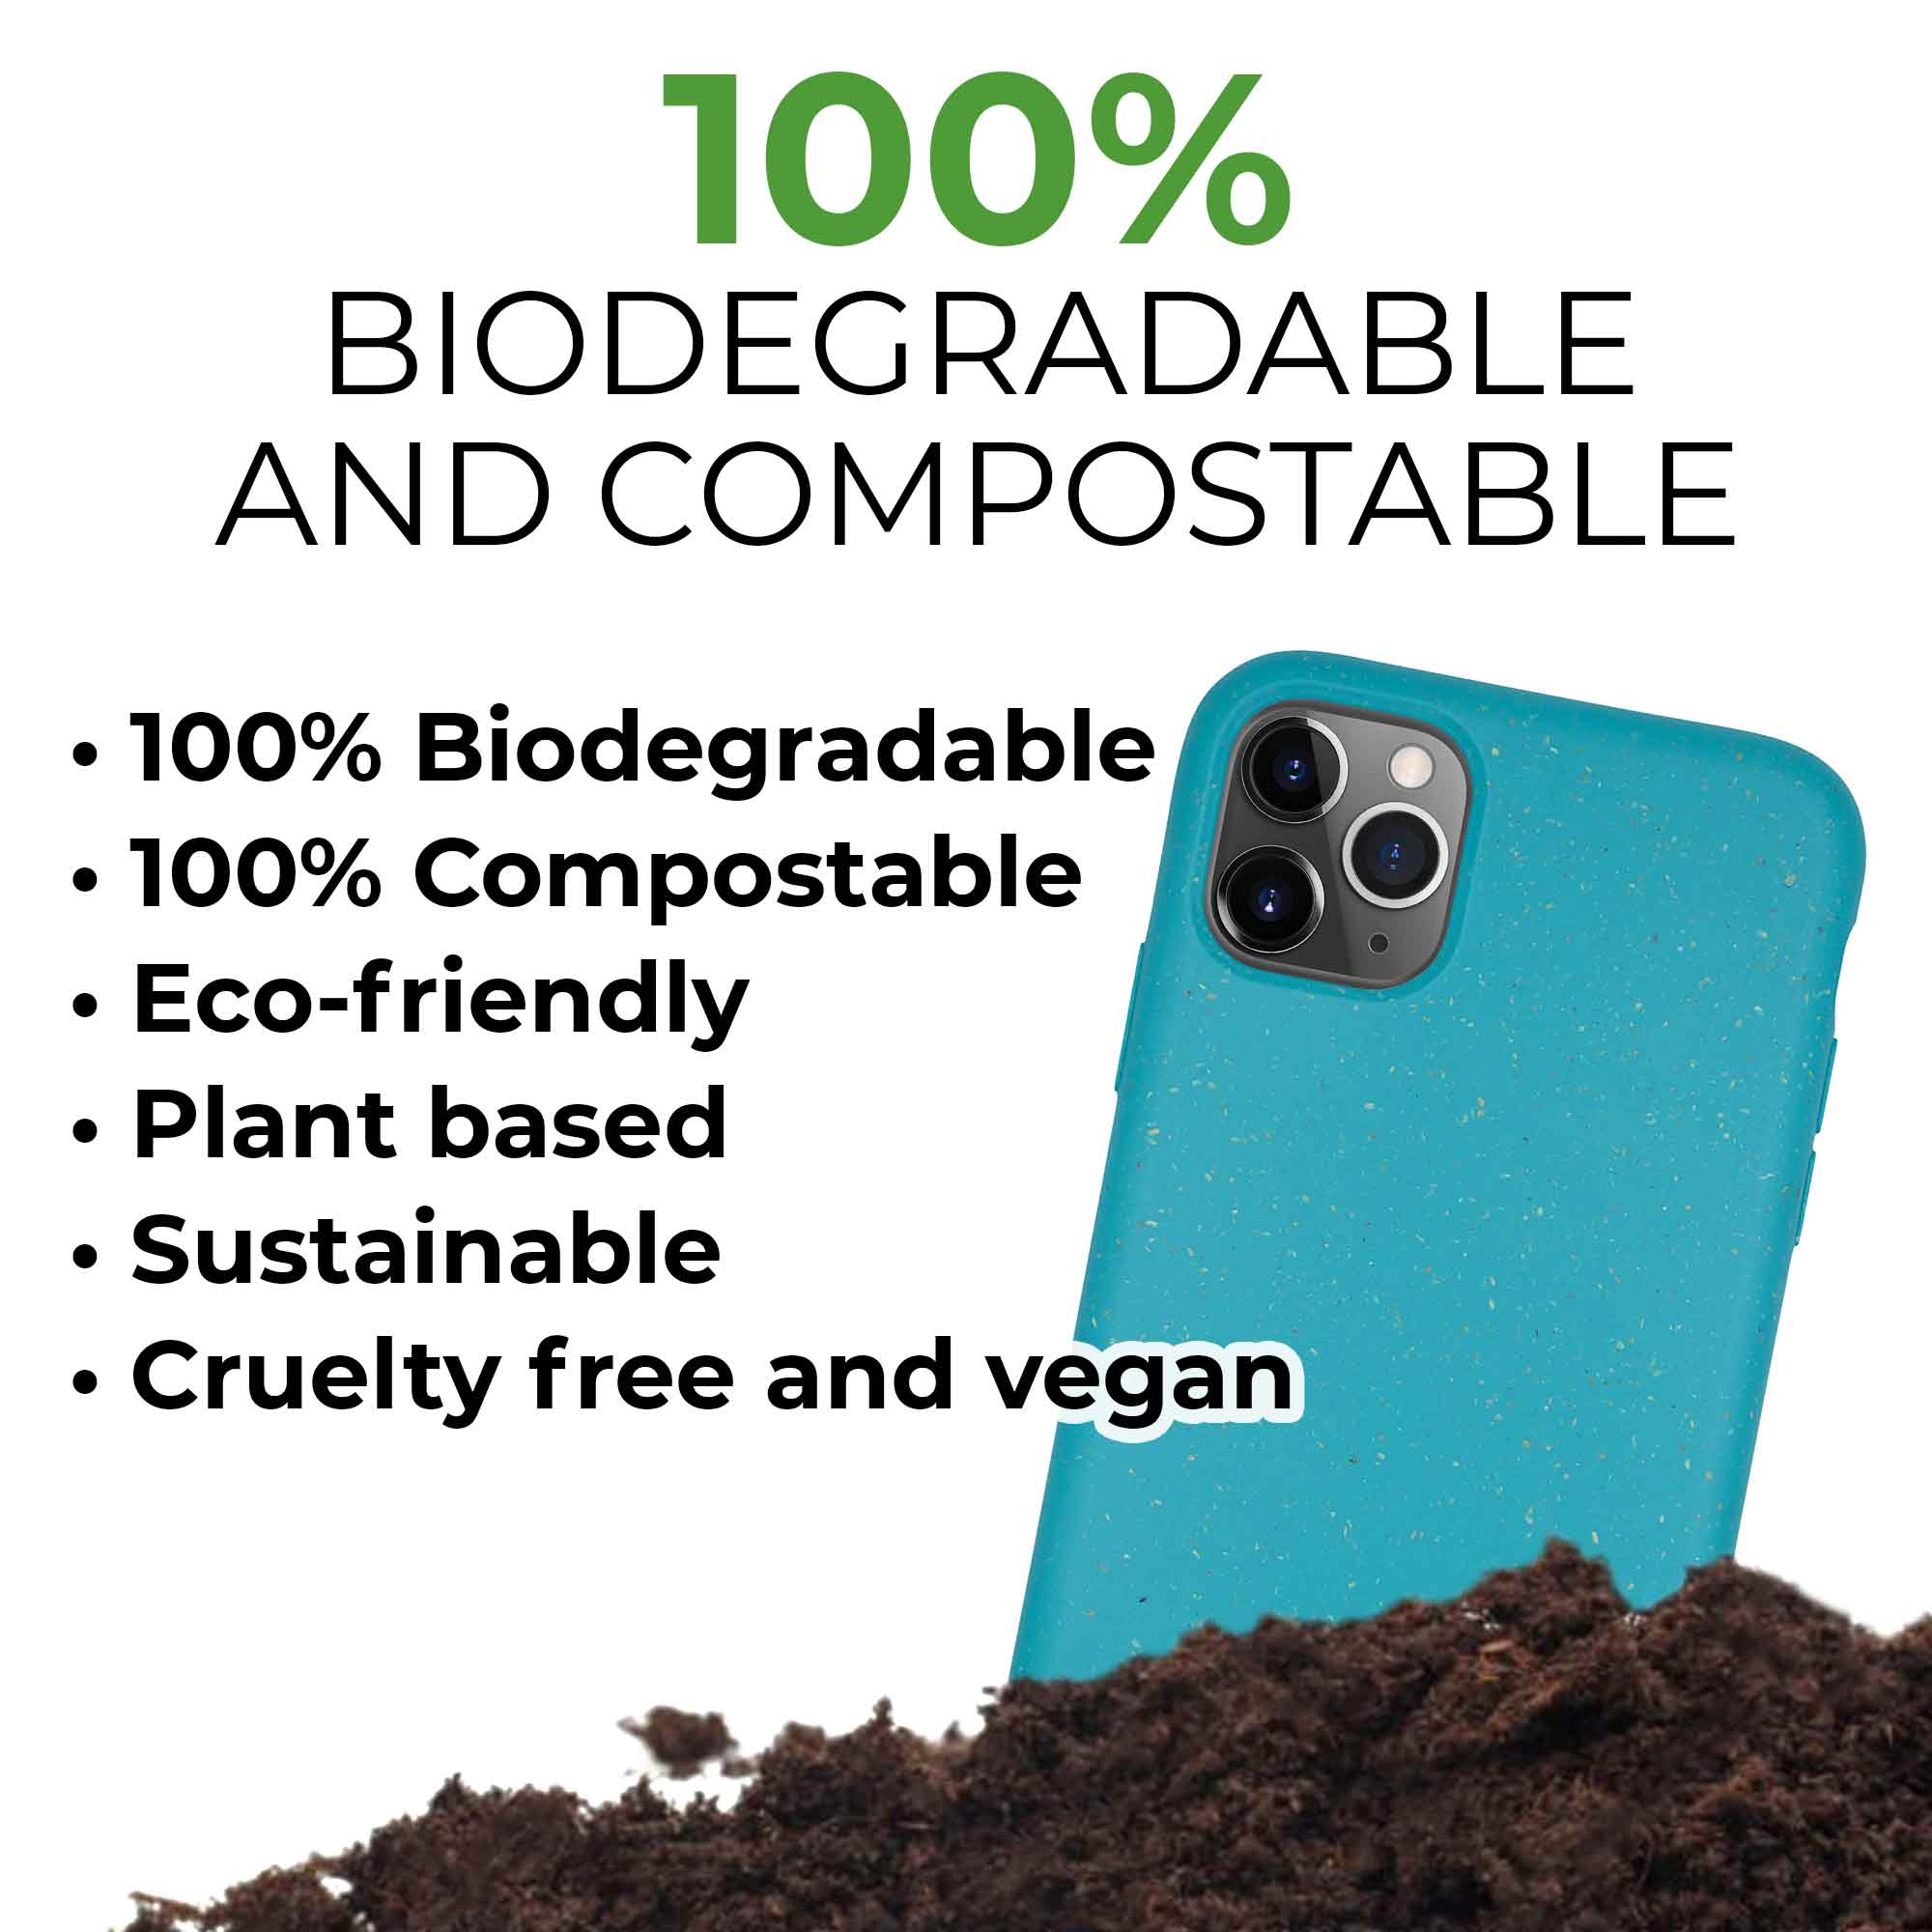 Vollständig kompostierbares iPhone-Hüllenmaterial